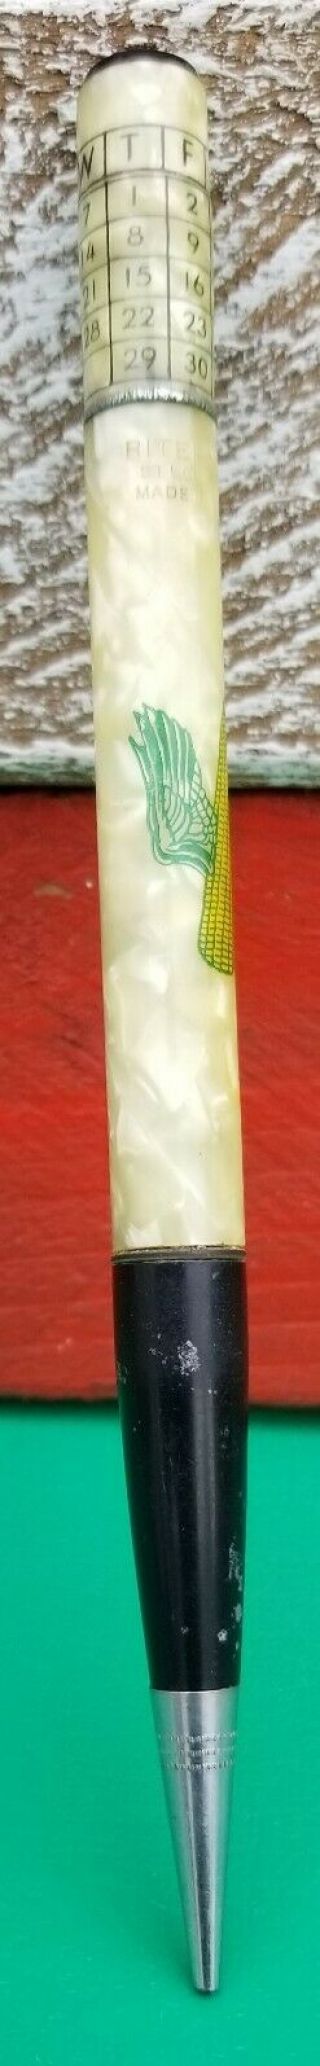 WACO GRESHAM Nebraska DeKalb Hybrid Corn SCHEELE farm Old Pencil NE vintage York 4